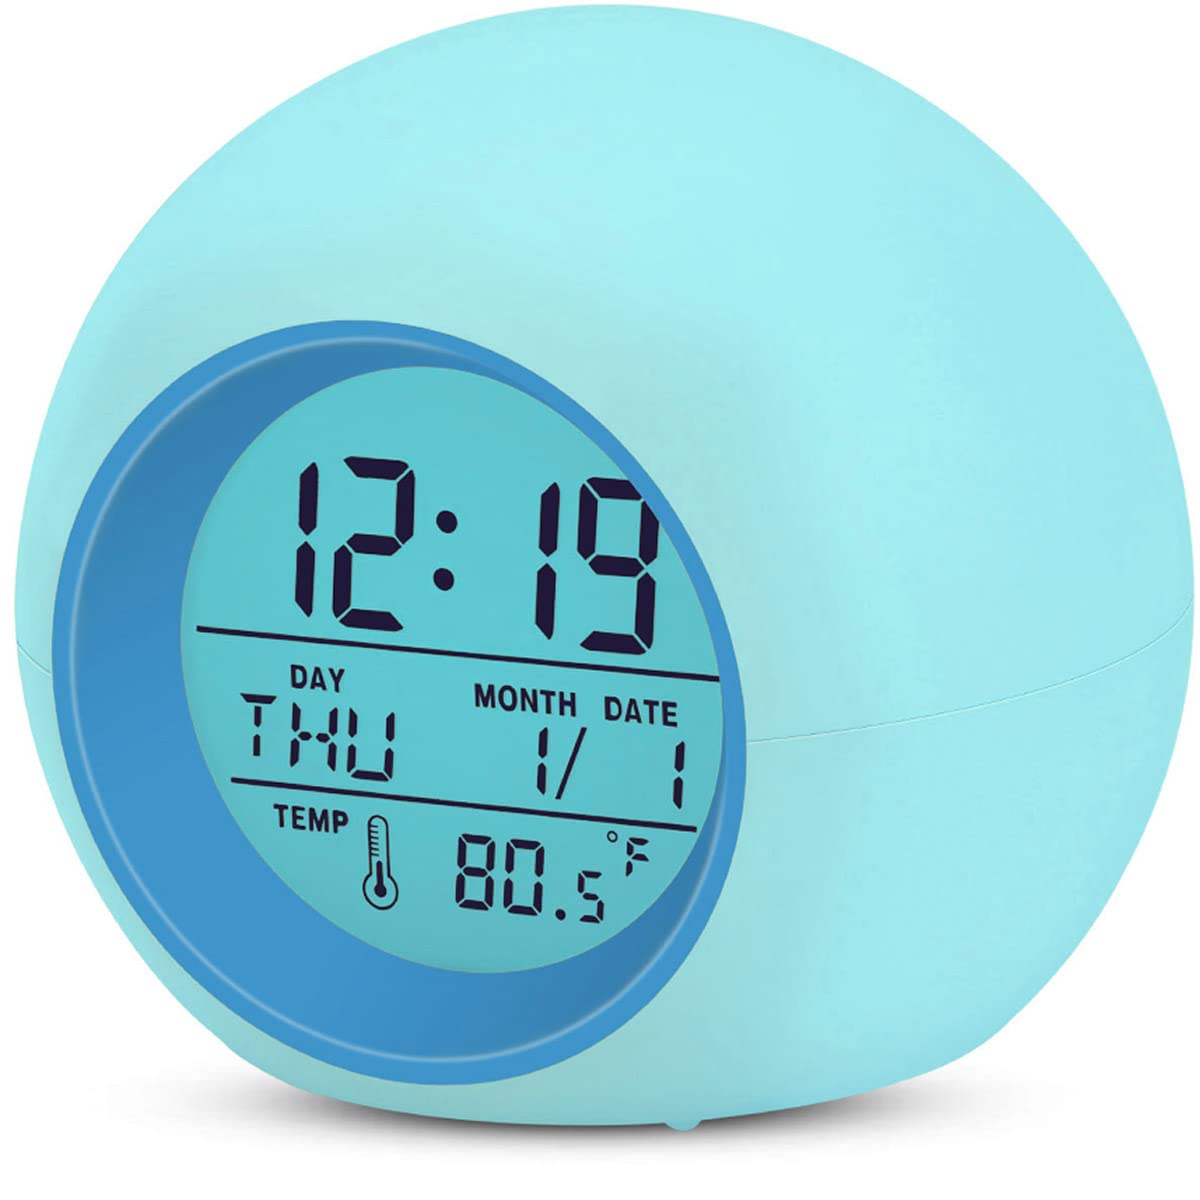 Lesipee Digital Alarm Clock